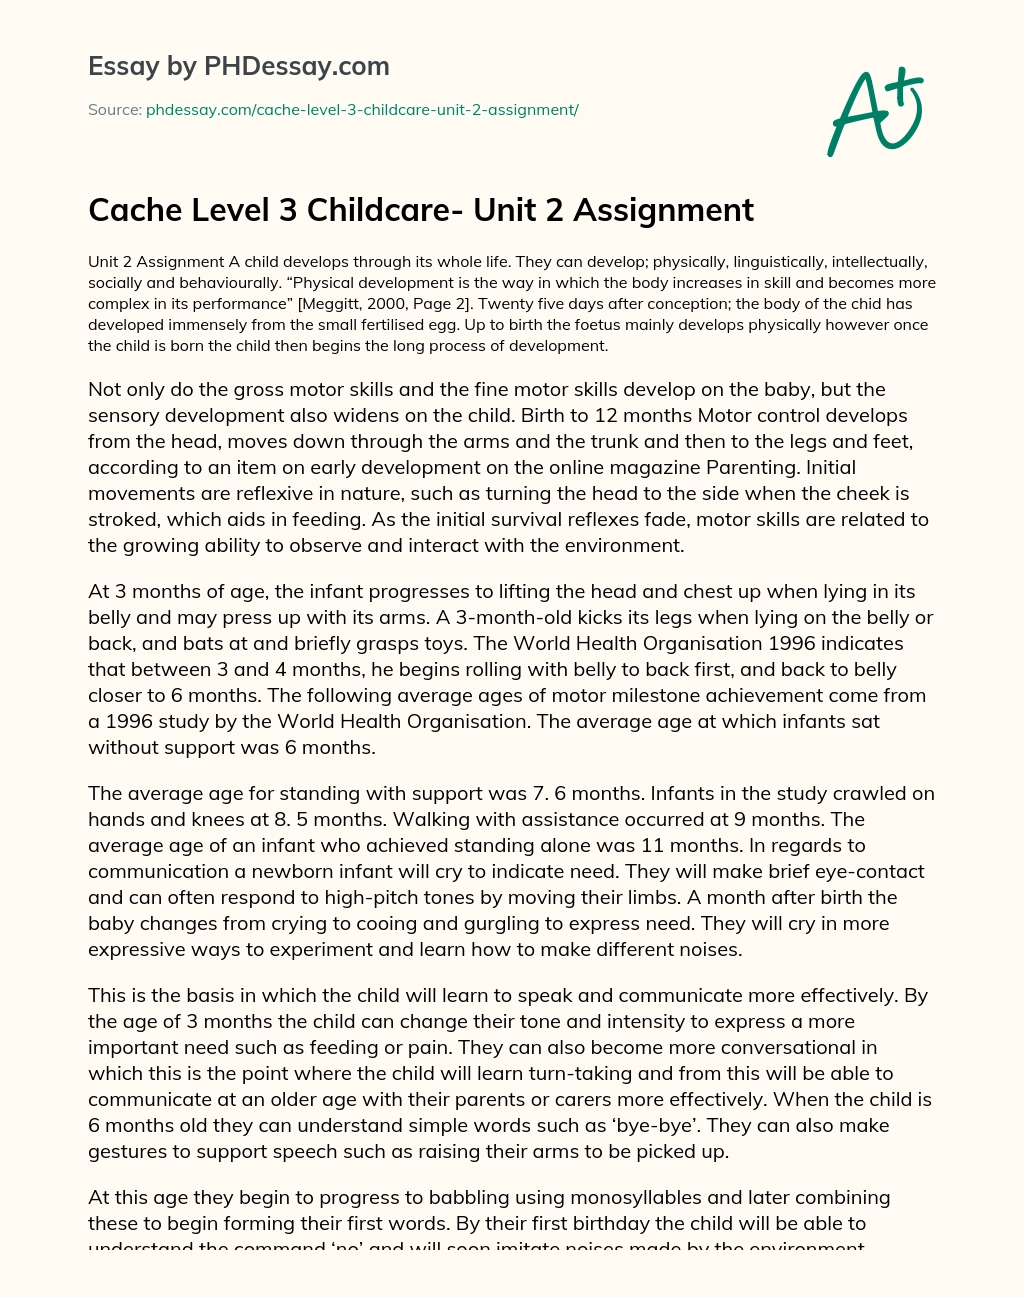 Cache Level 3 Childcare- Unit 2 Assignment essay